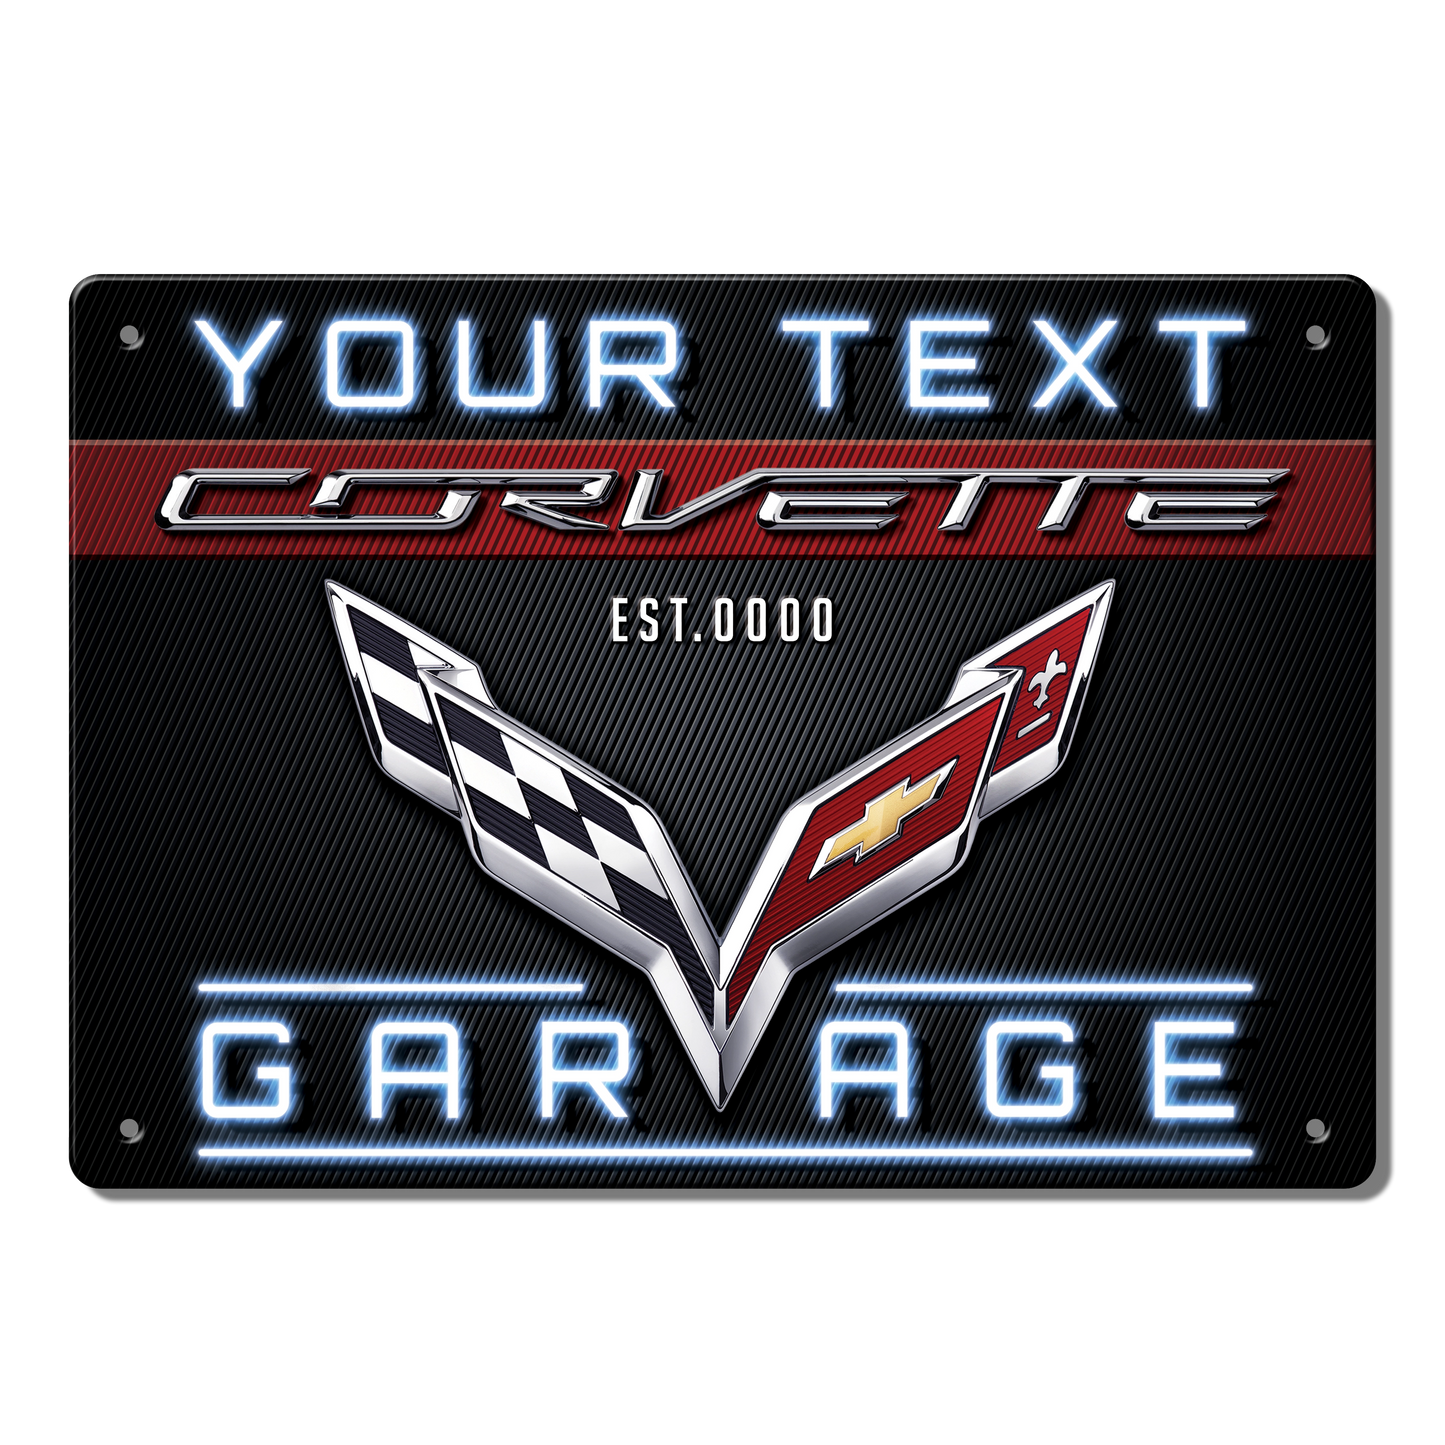 Corvette Garage Desklite (Plate Only)